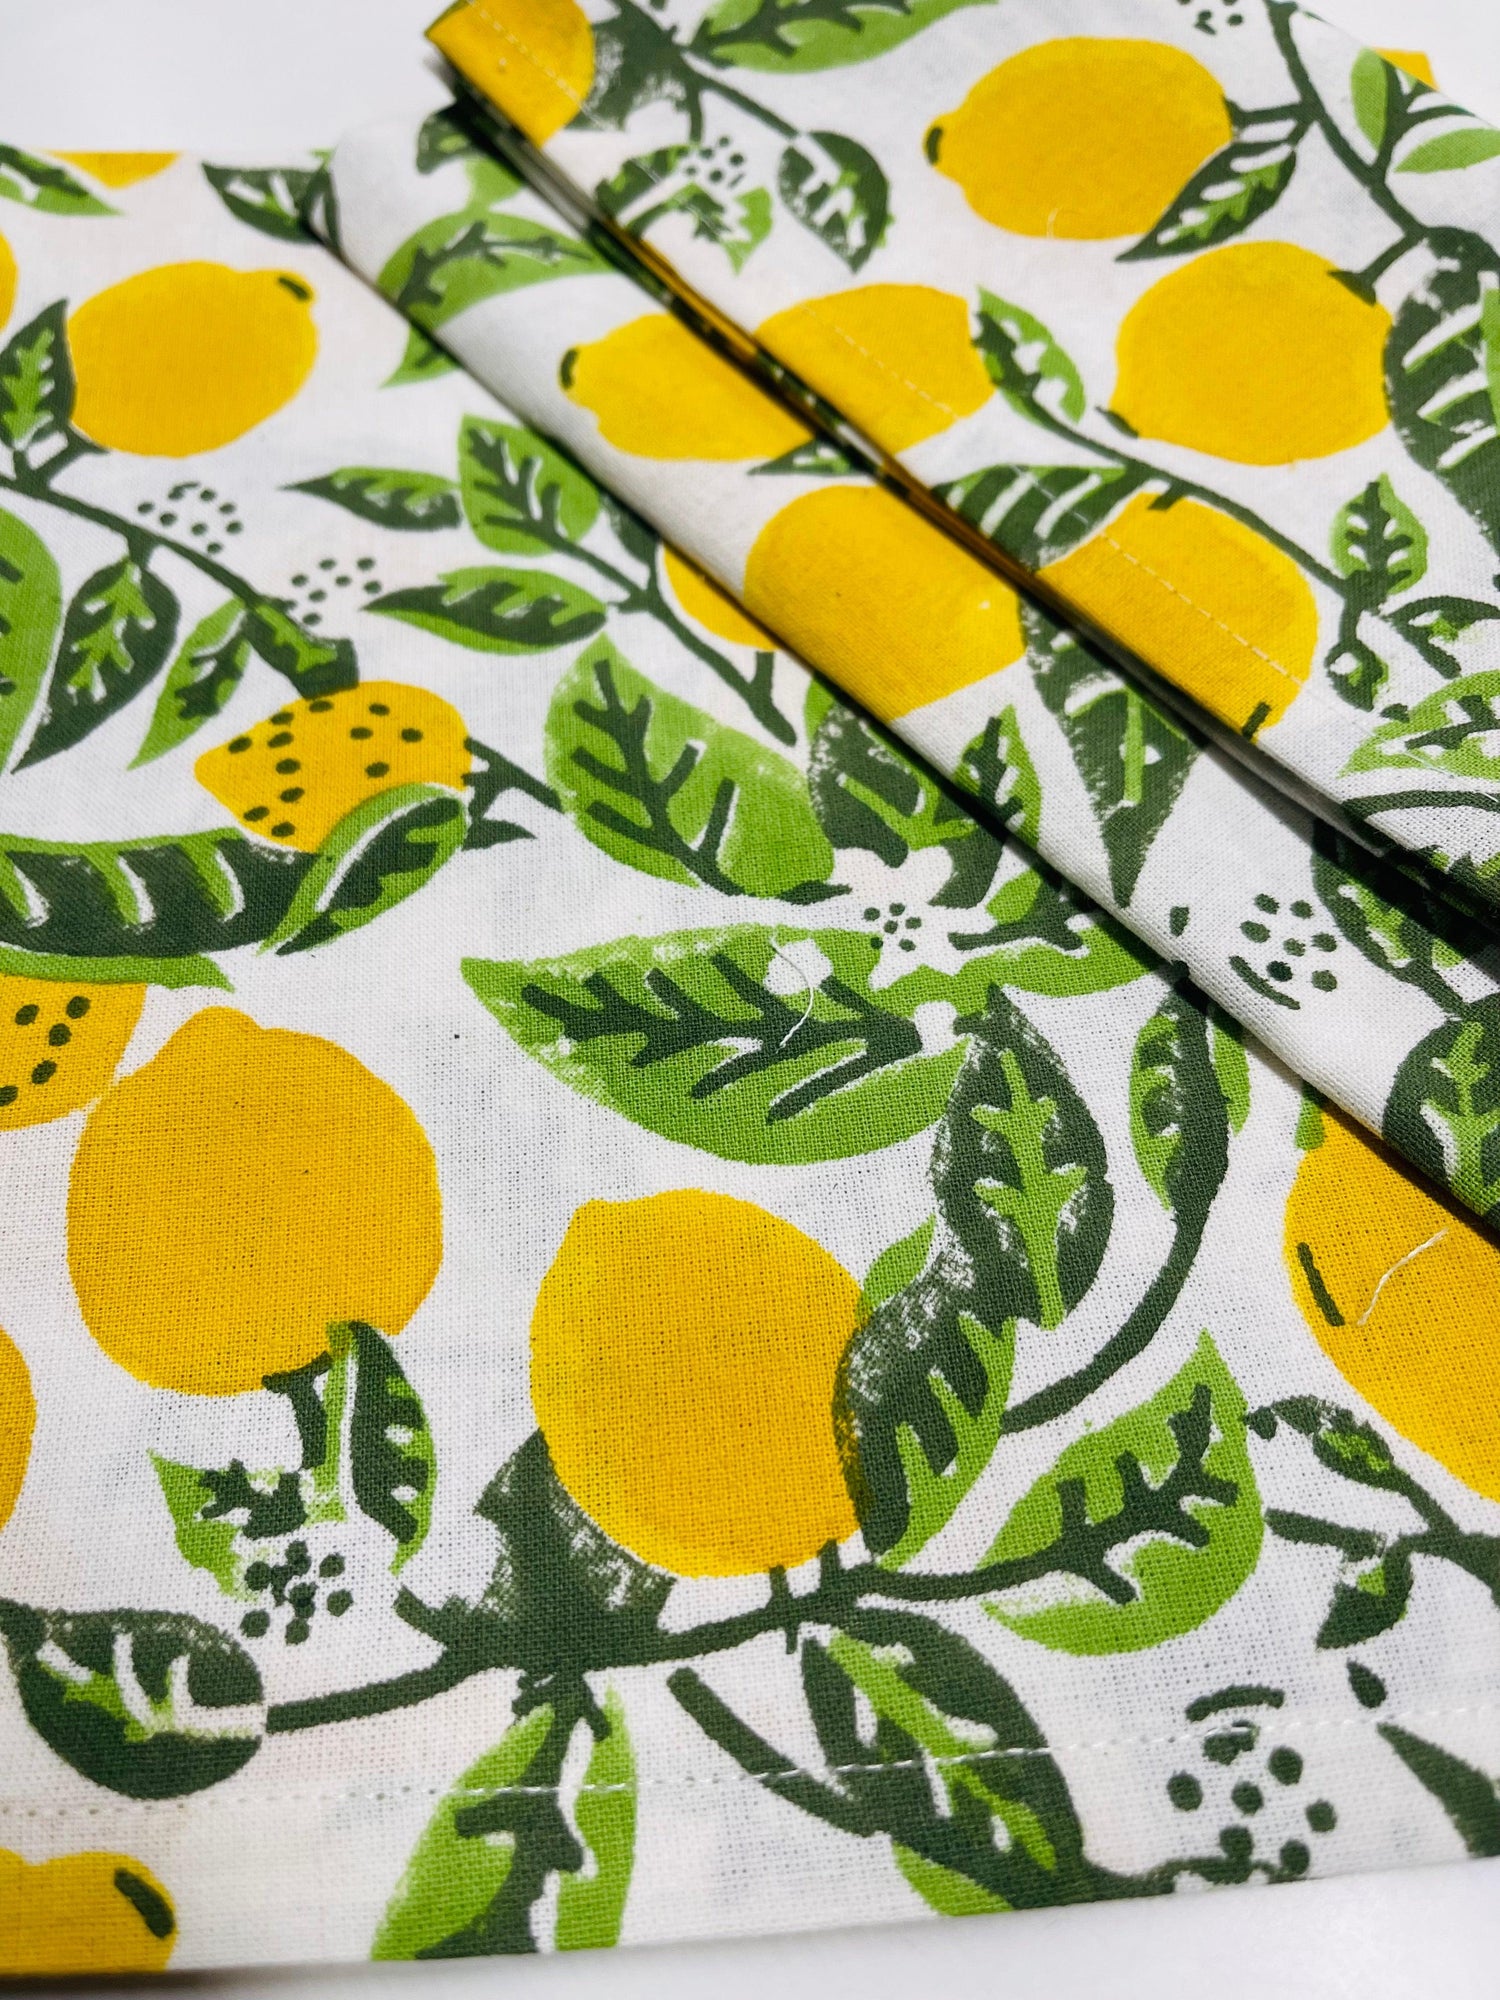 Lemon Print Cotton Napkins: Vibrant Cotton Table Linens - Rooii by Tuvisha